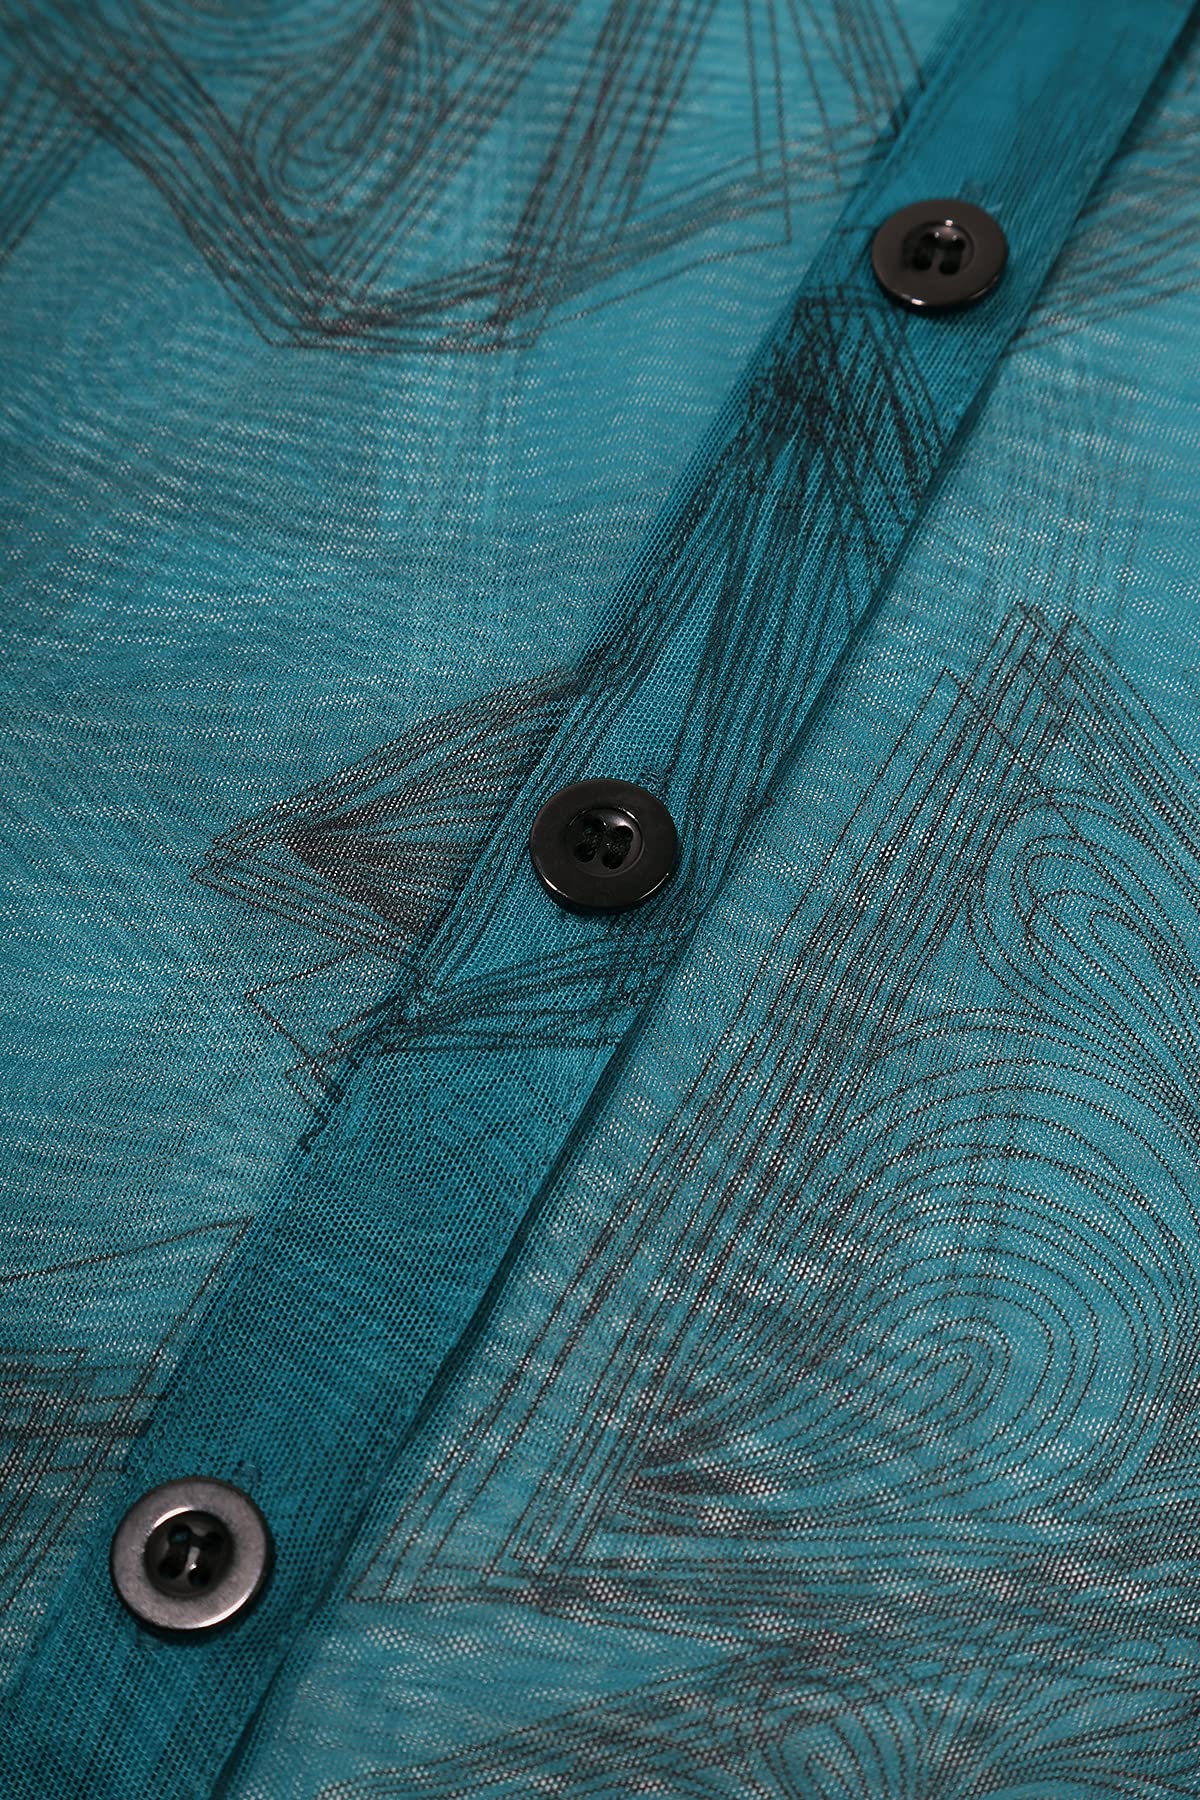 BAISHENGGT Peacock Blue Womens Sexy Mesh Sheer Tops Long Sleeve Button Down Shirts Blouses